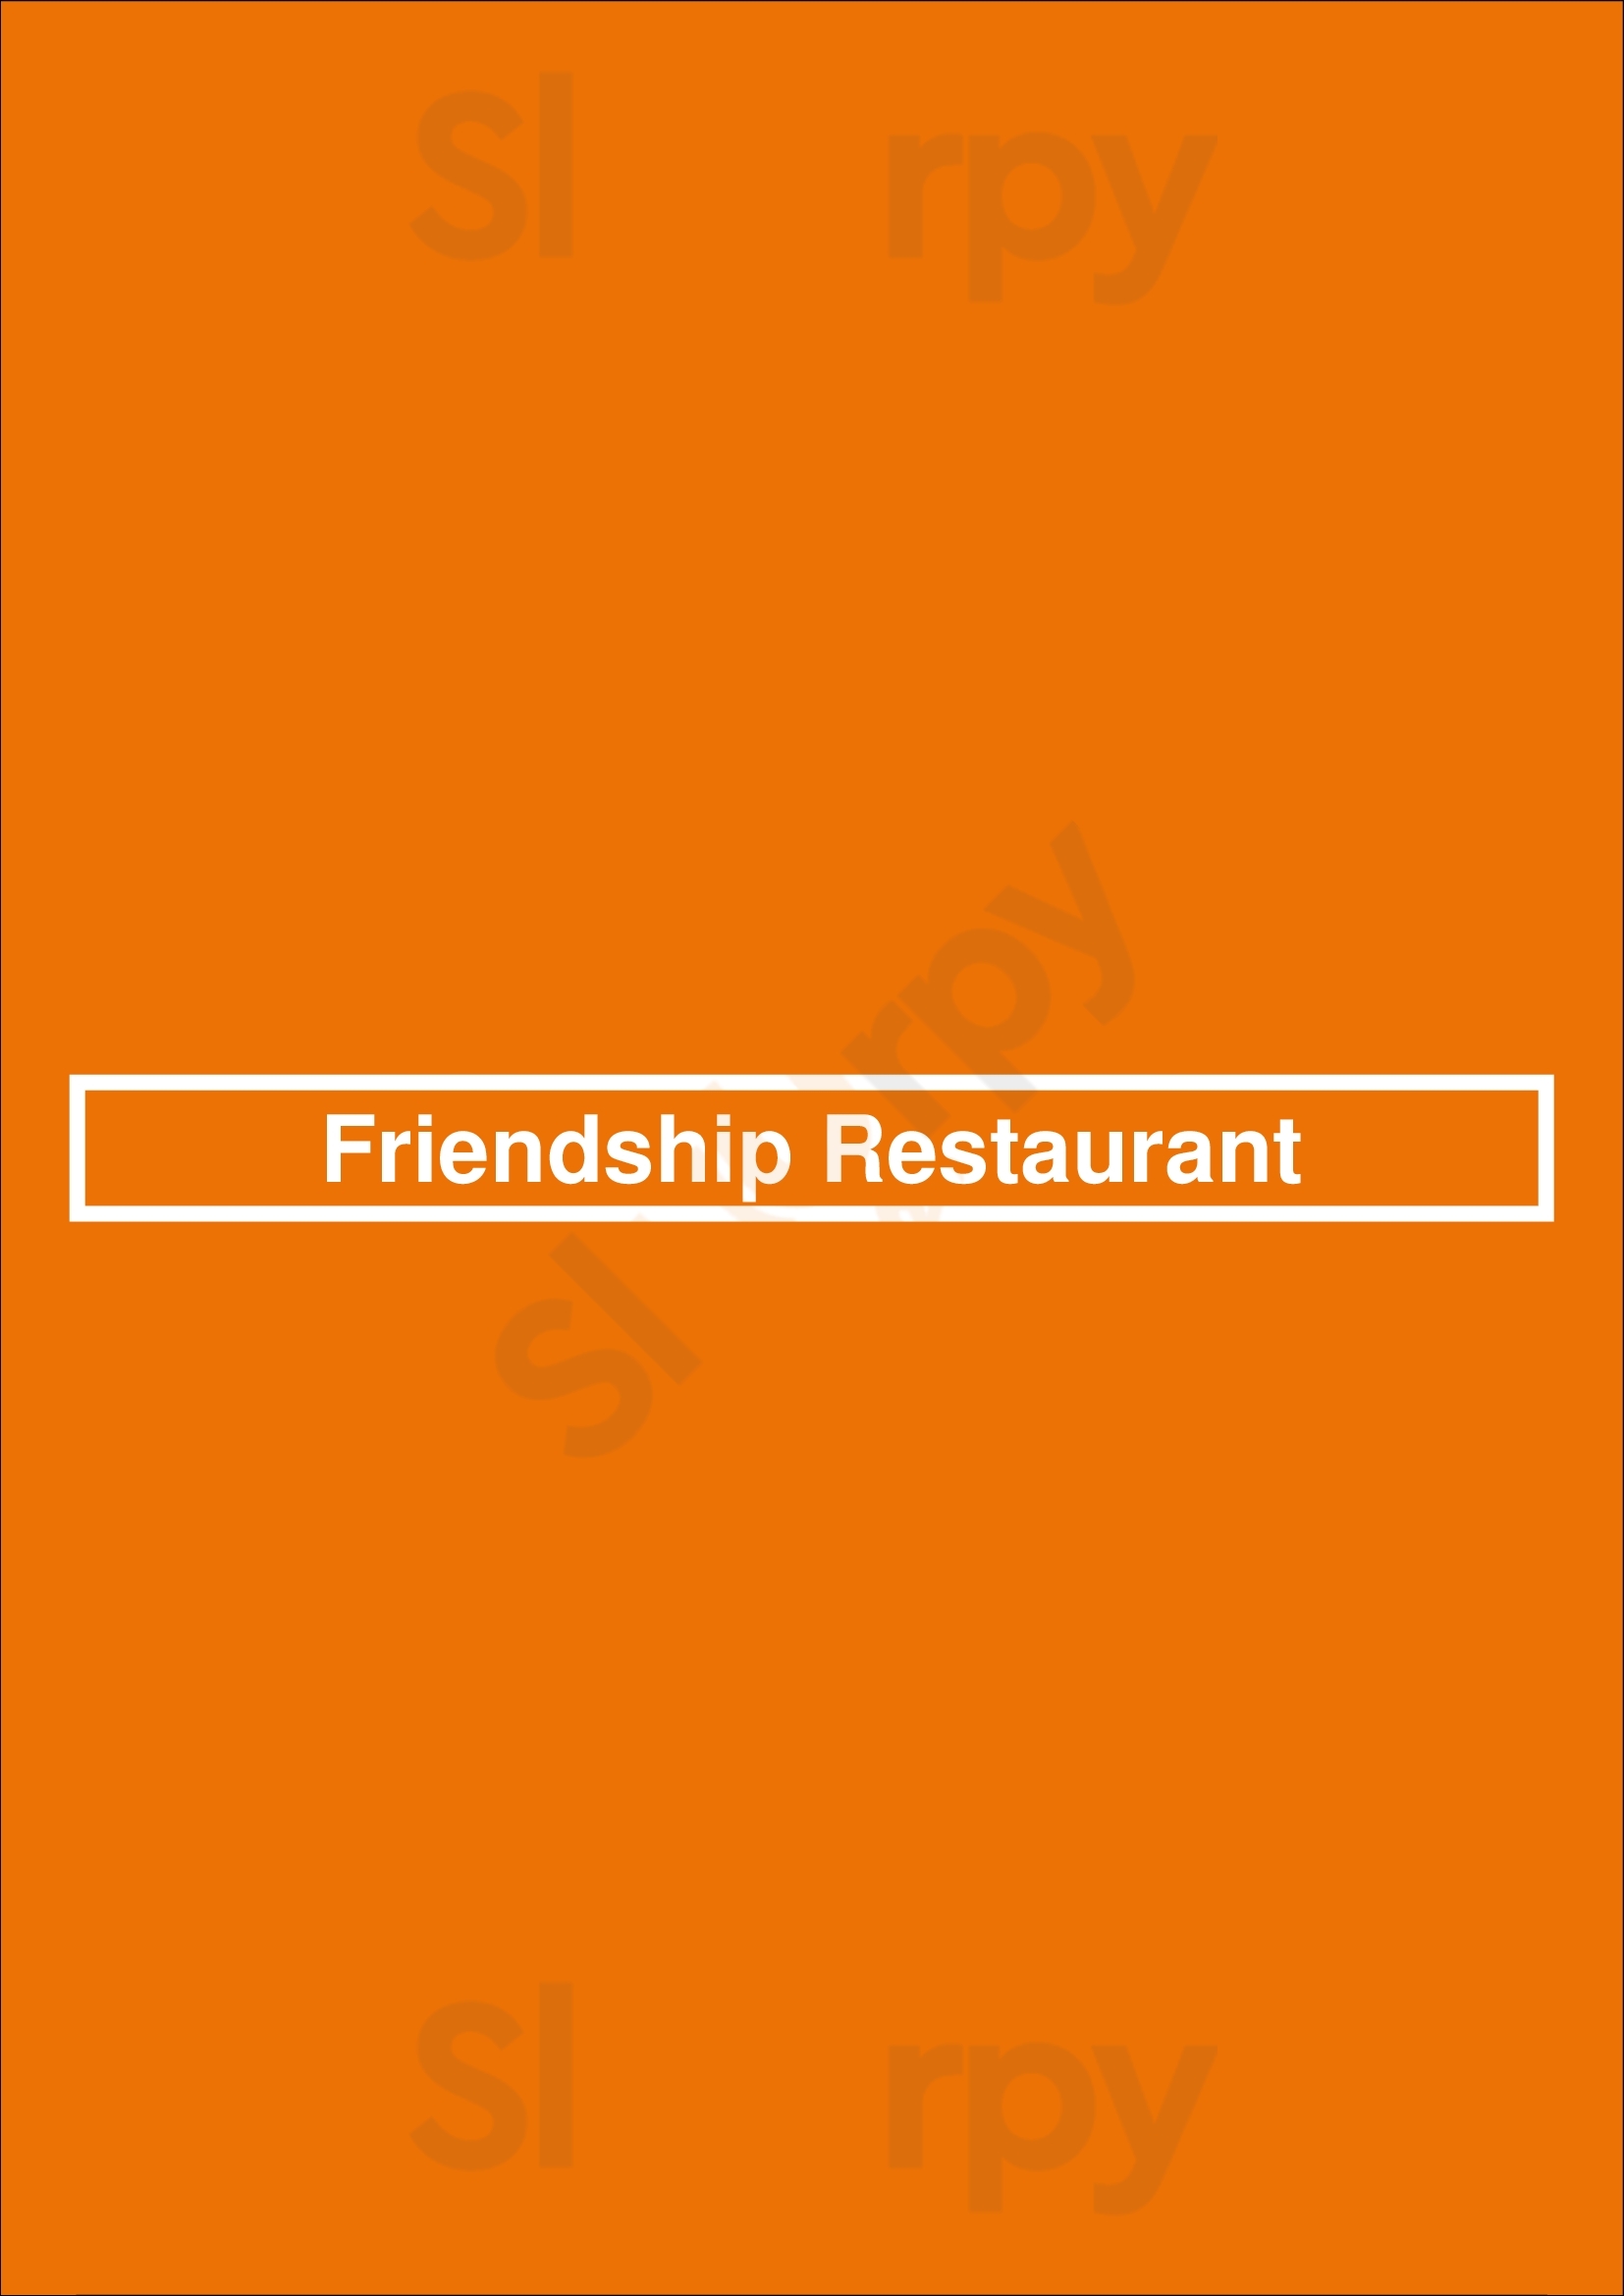 Friendship Restaurant Toronto Menu - 1